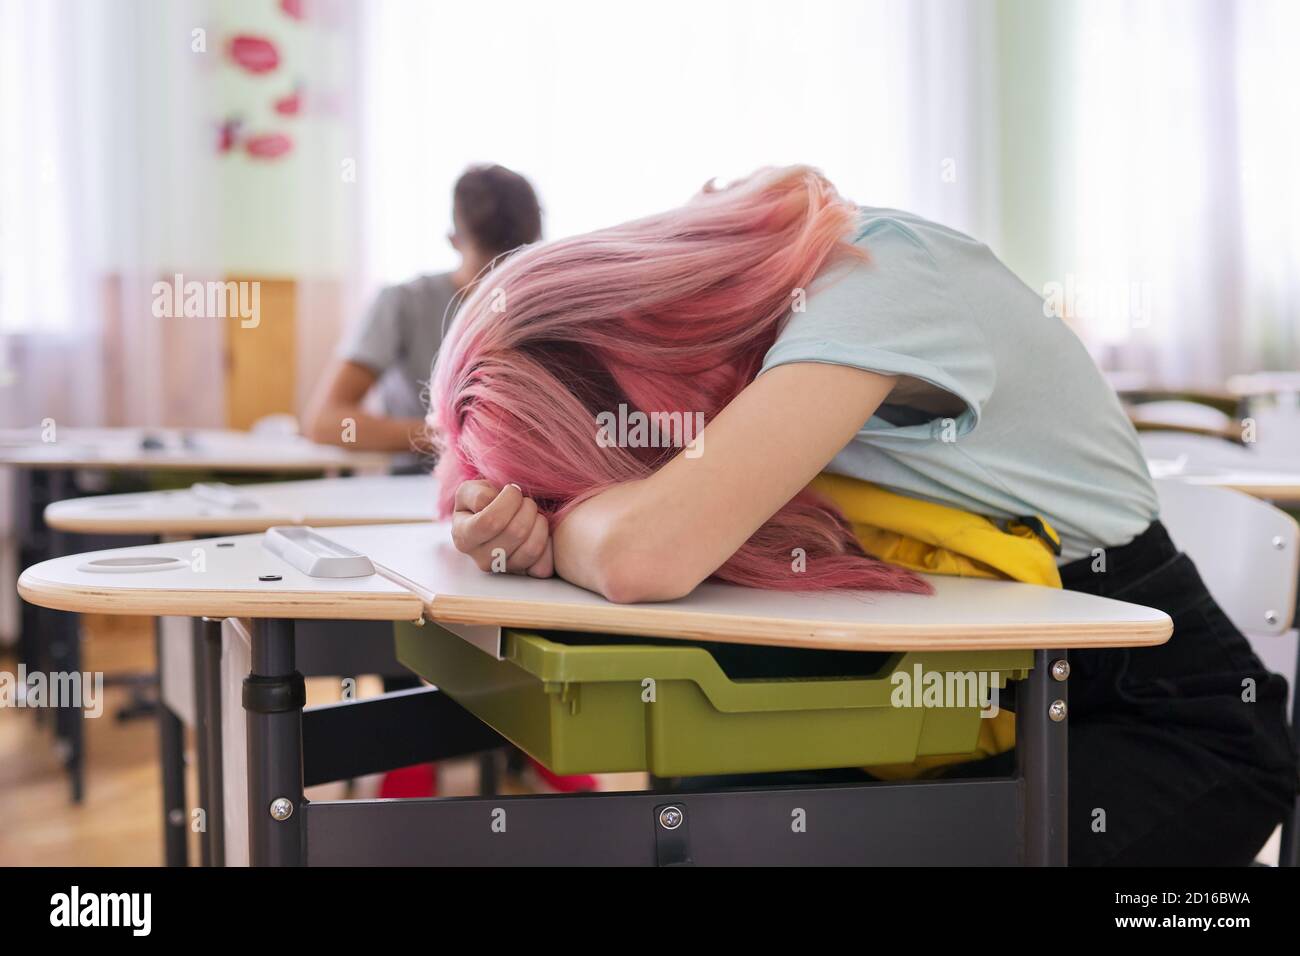 Tired girl teenage student asleep on her desk Stock Photo